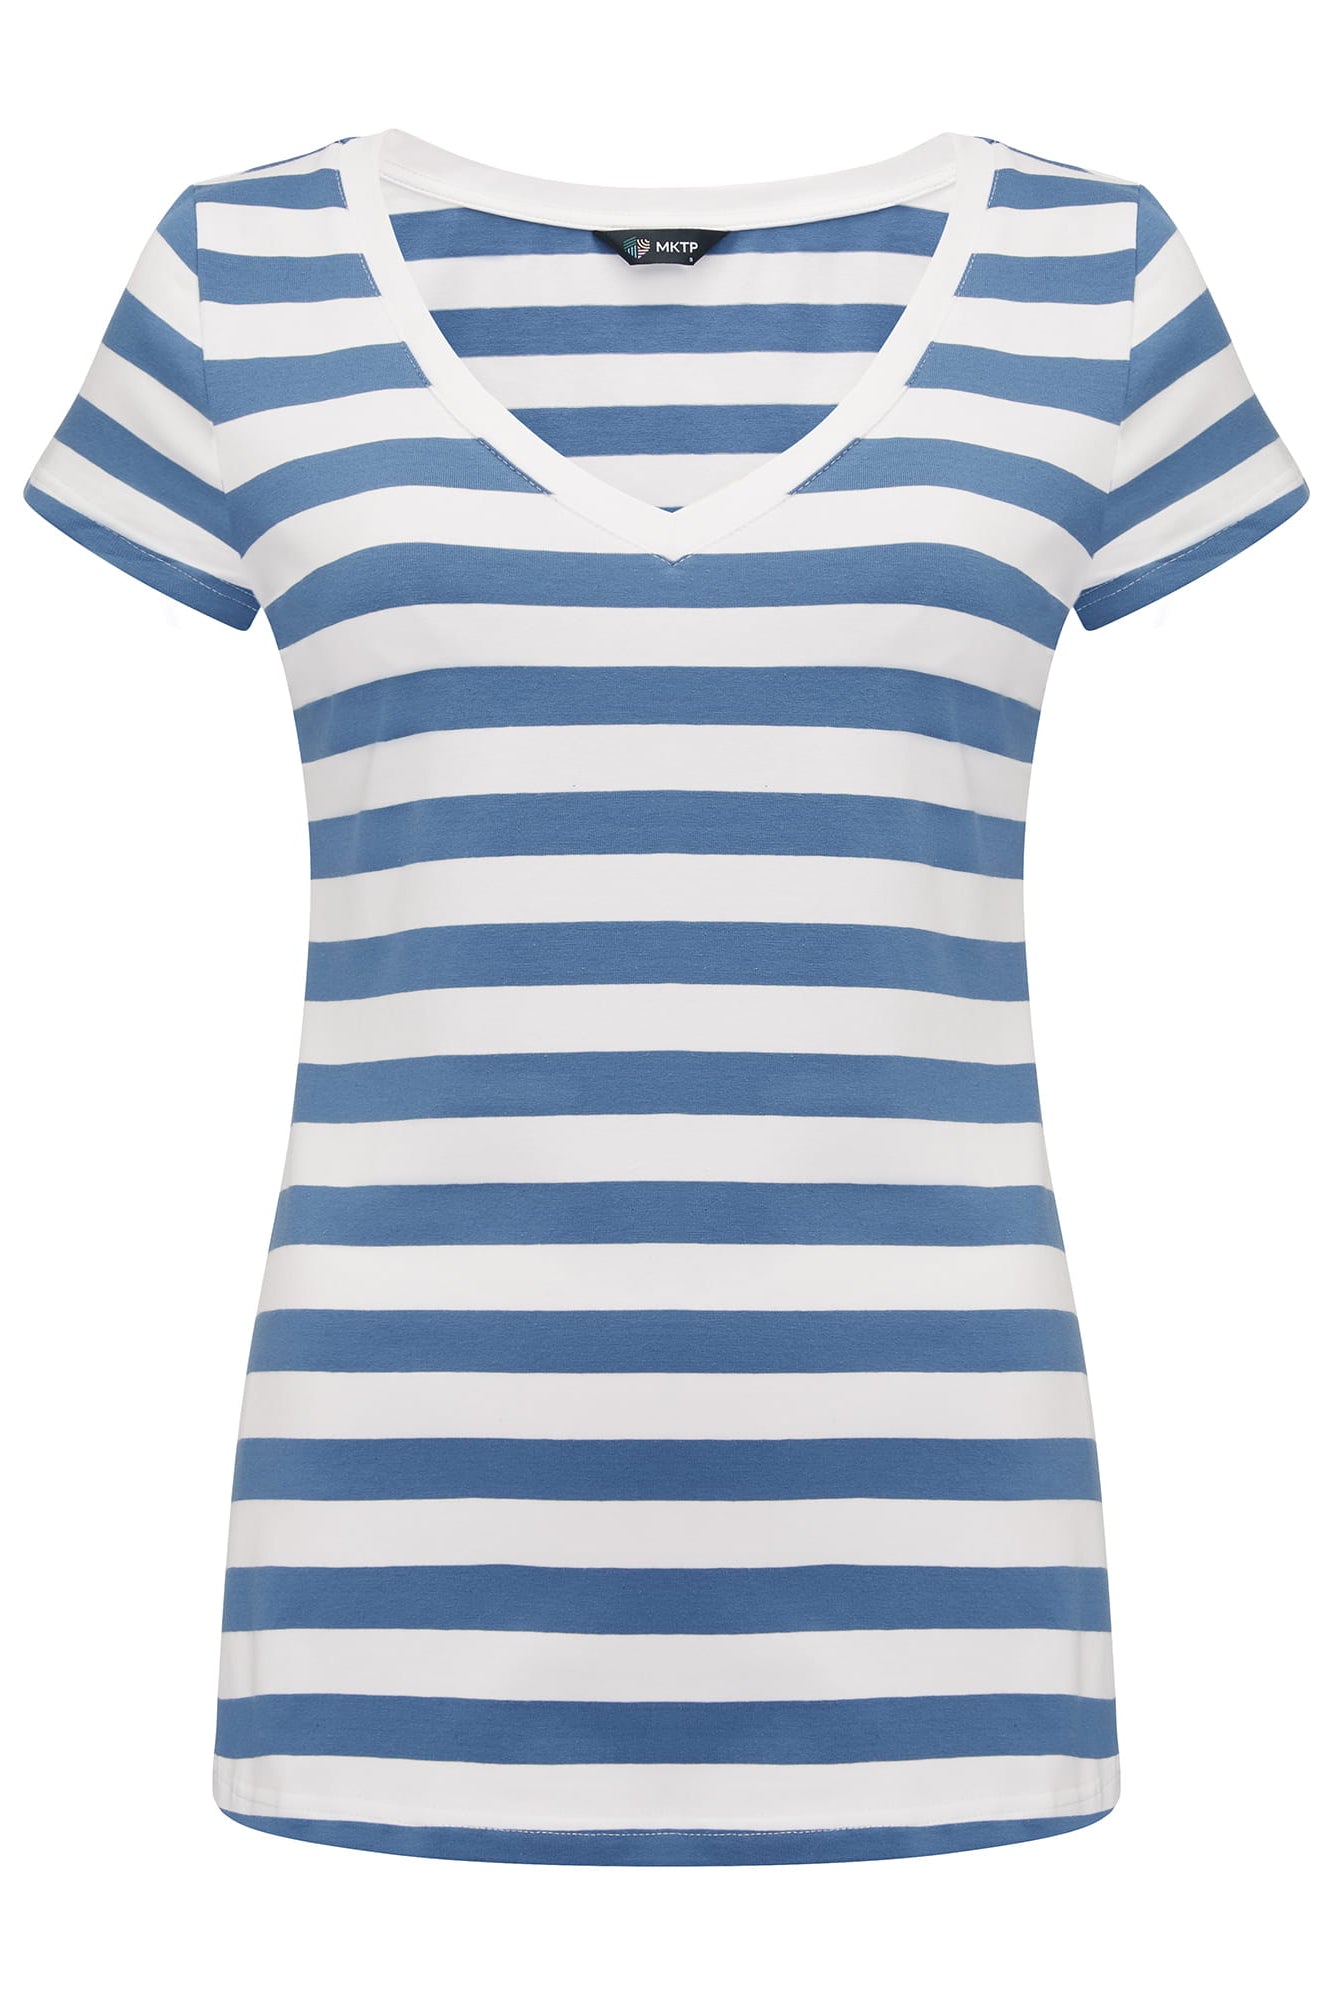 T-shirt Perfect Lines Szerokie Paski Niebieski Dżins